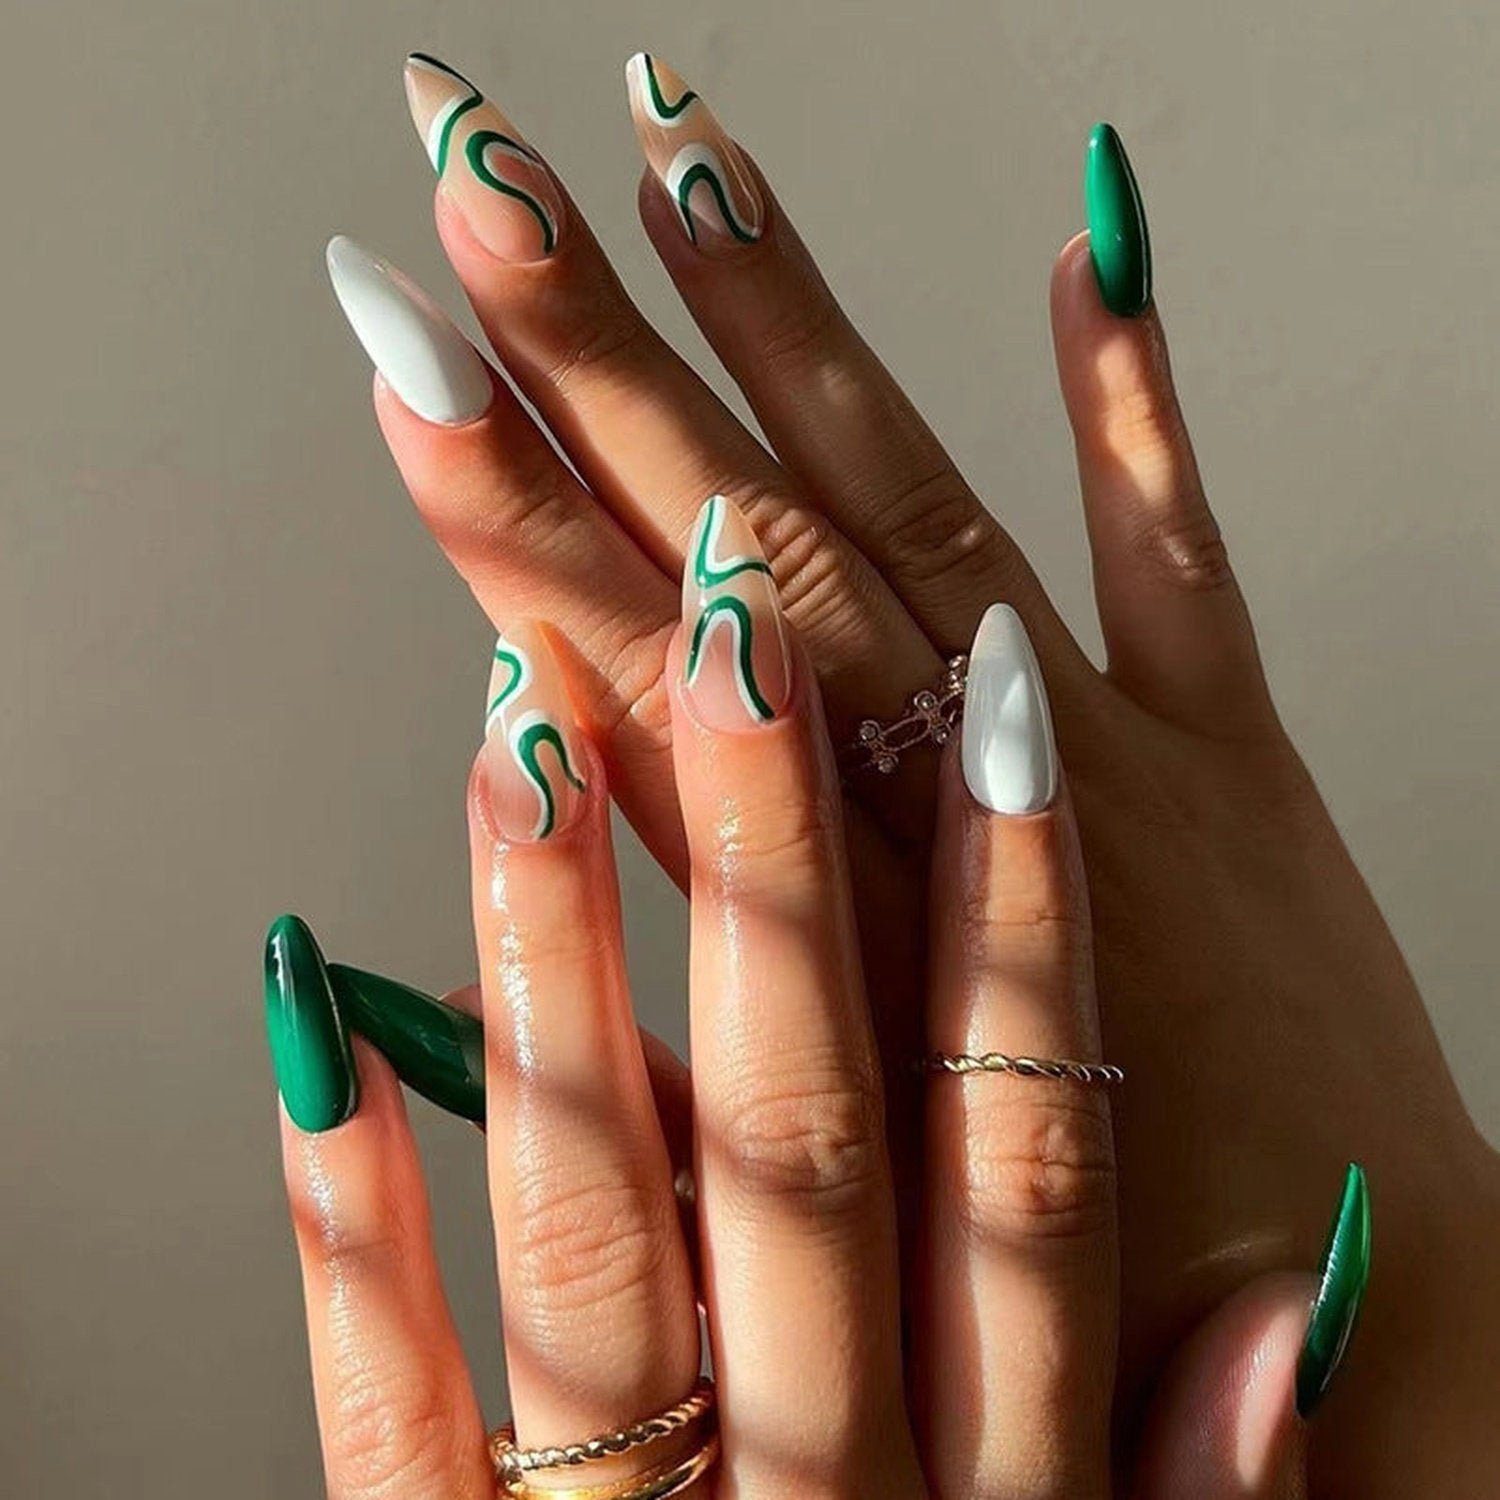 AUKUU Kunstfingernägel Grüner Grüner natürlicher Mandelnagel eistransparent künstlicher, Nagel fertiges Produkt tragbares Nagelstück künstlicher Nagel